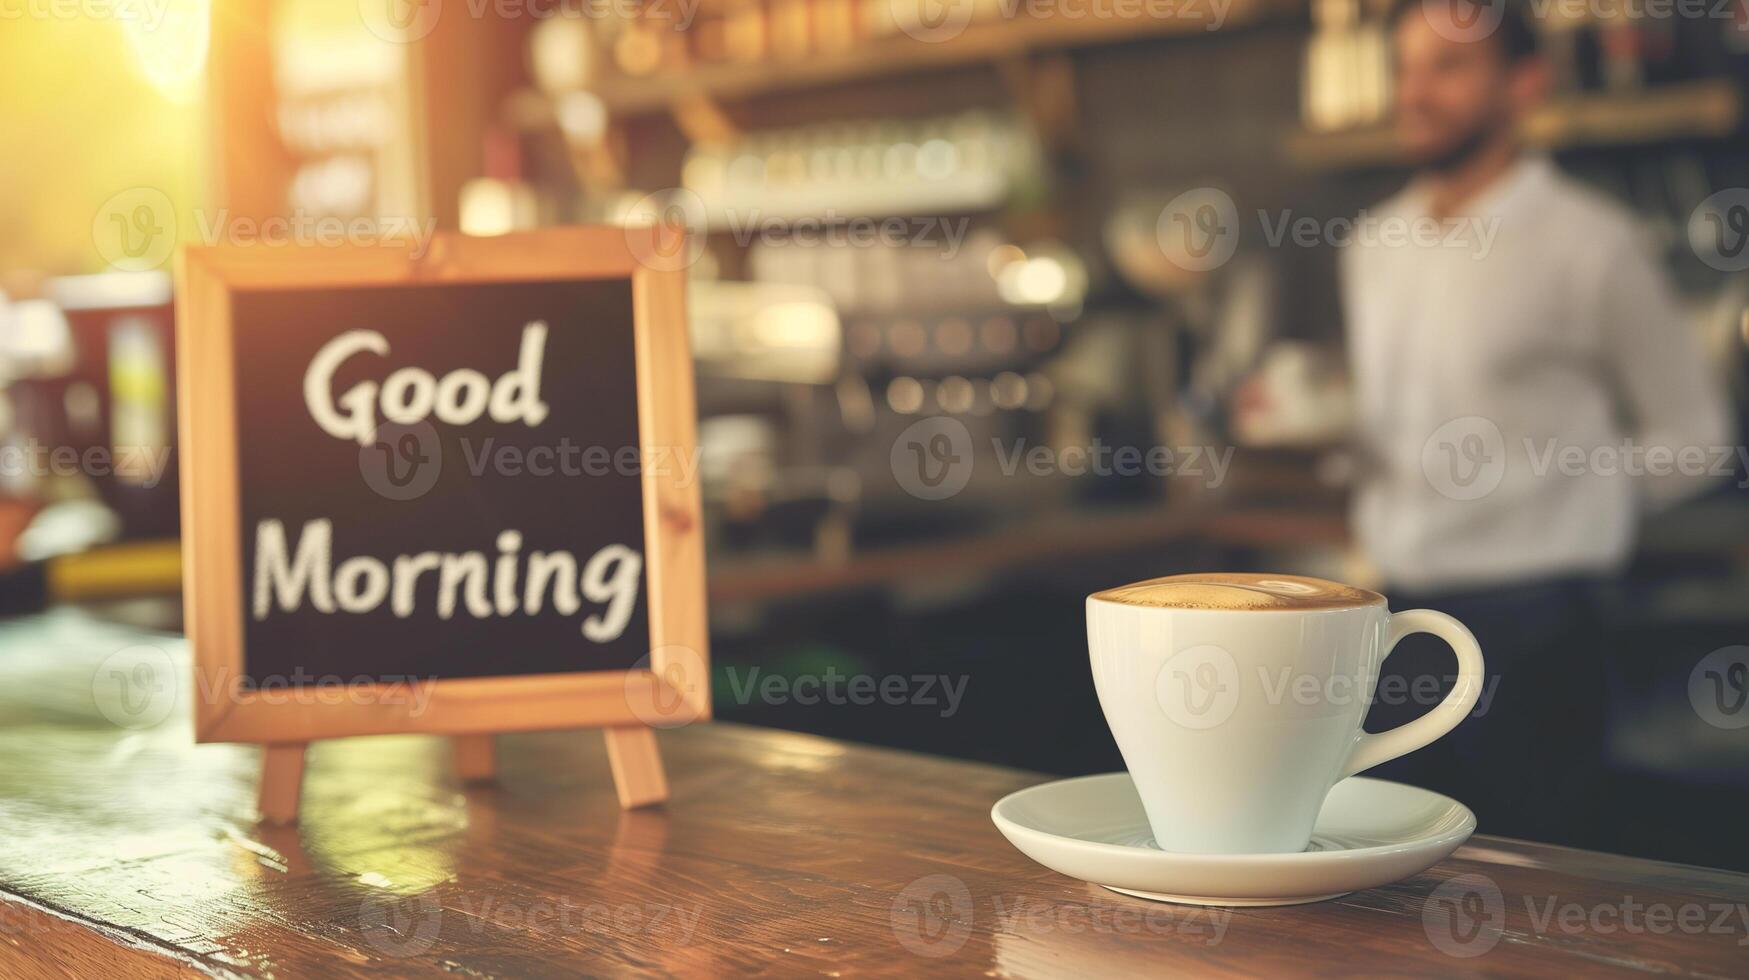 ai gegenereerd koffie kop en schoolbord met mooi zo ochtend- tekst Aan tafel in cafe foto